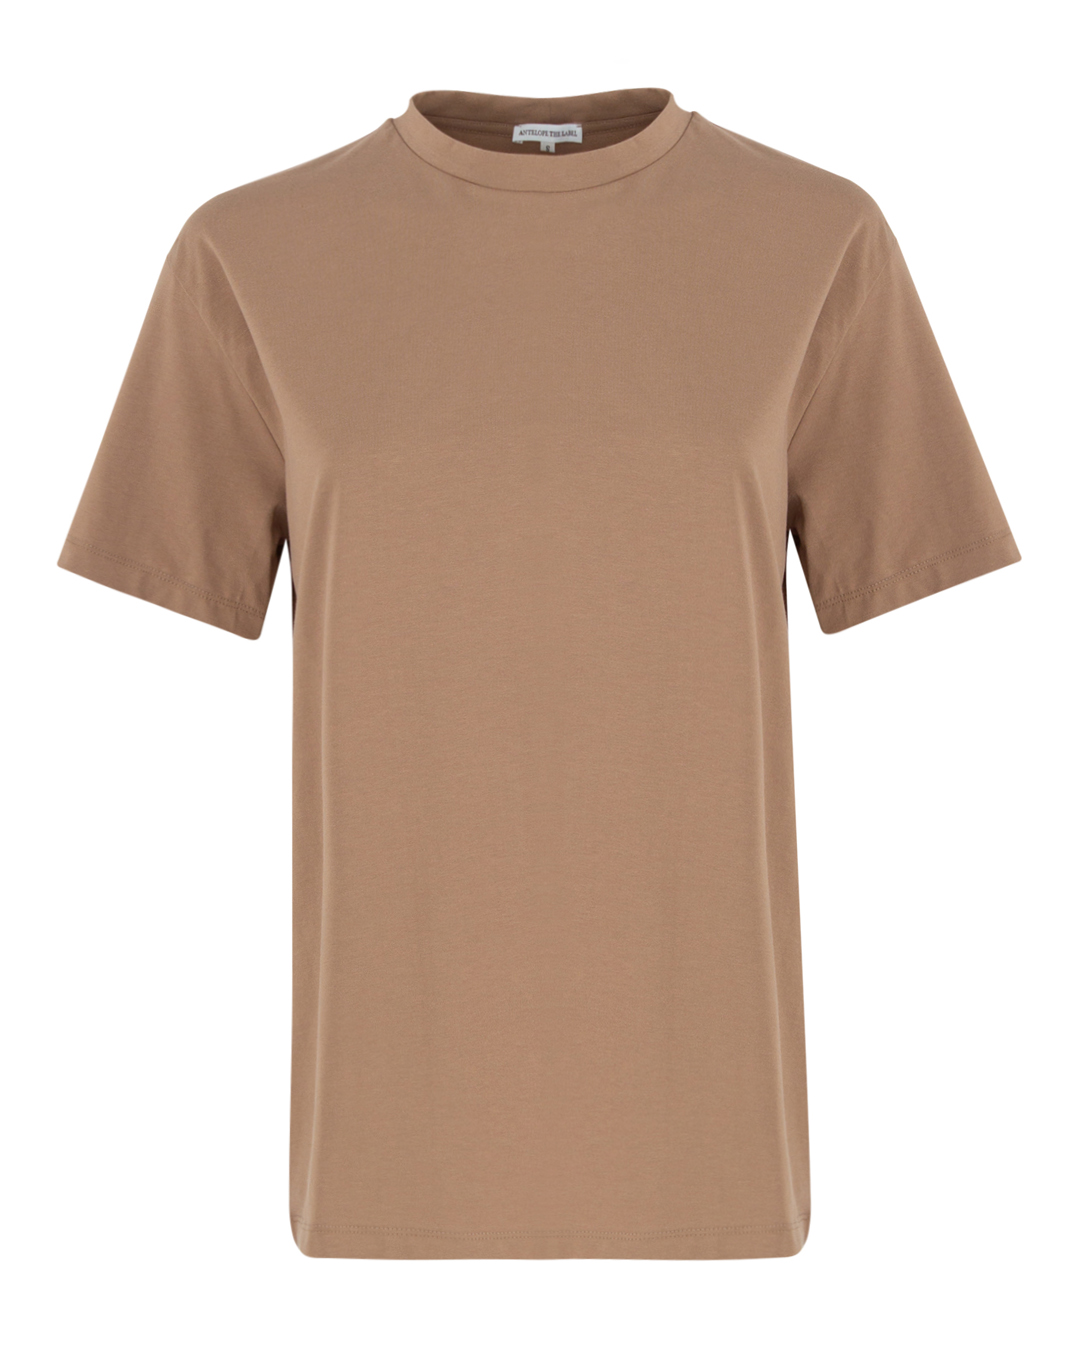 хлопковая футболка ANTELOPE THE LABEL T1.CAMEL коричневый s, размер s